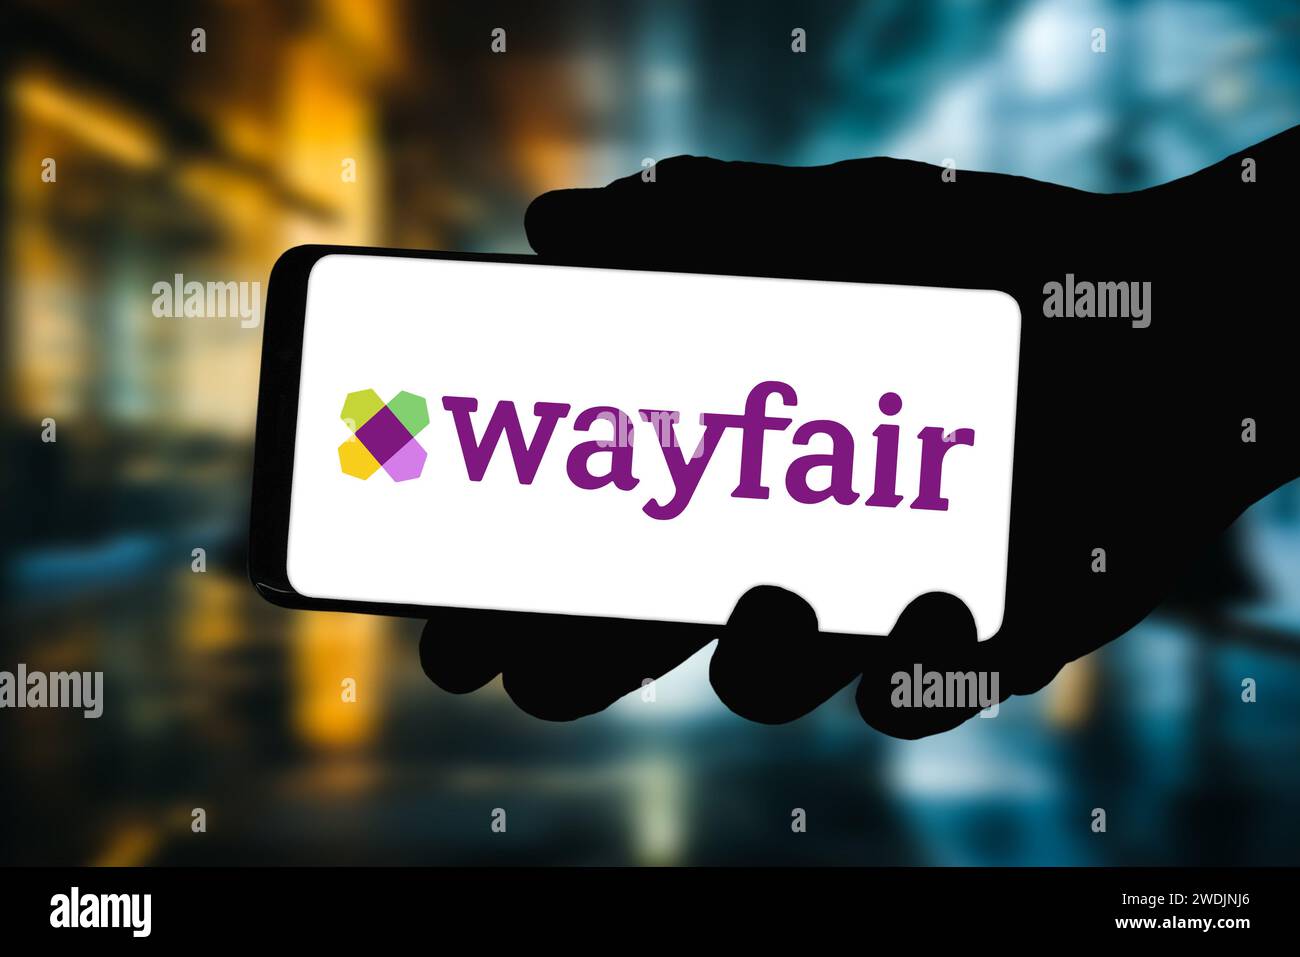 Wayfair furniture company logo displayed on smartphone Stock Photo